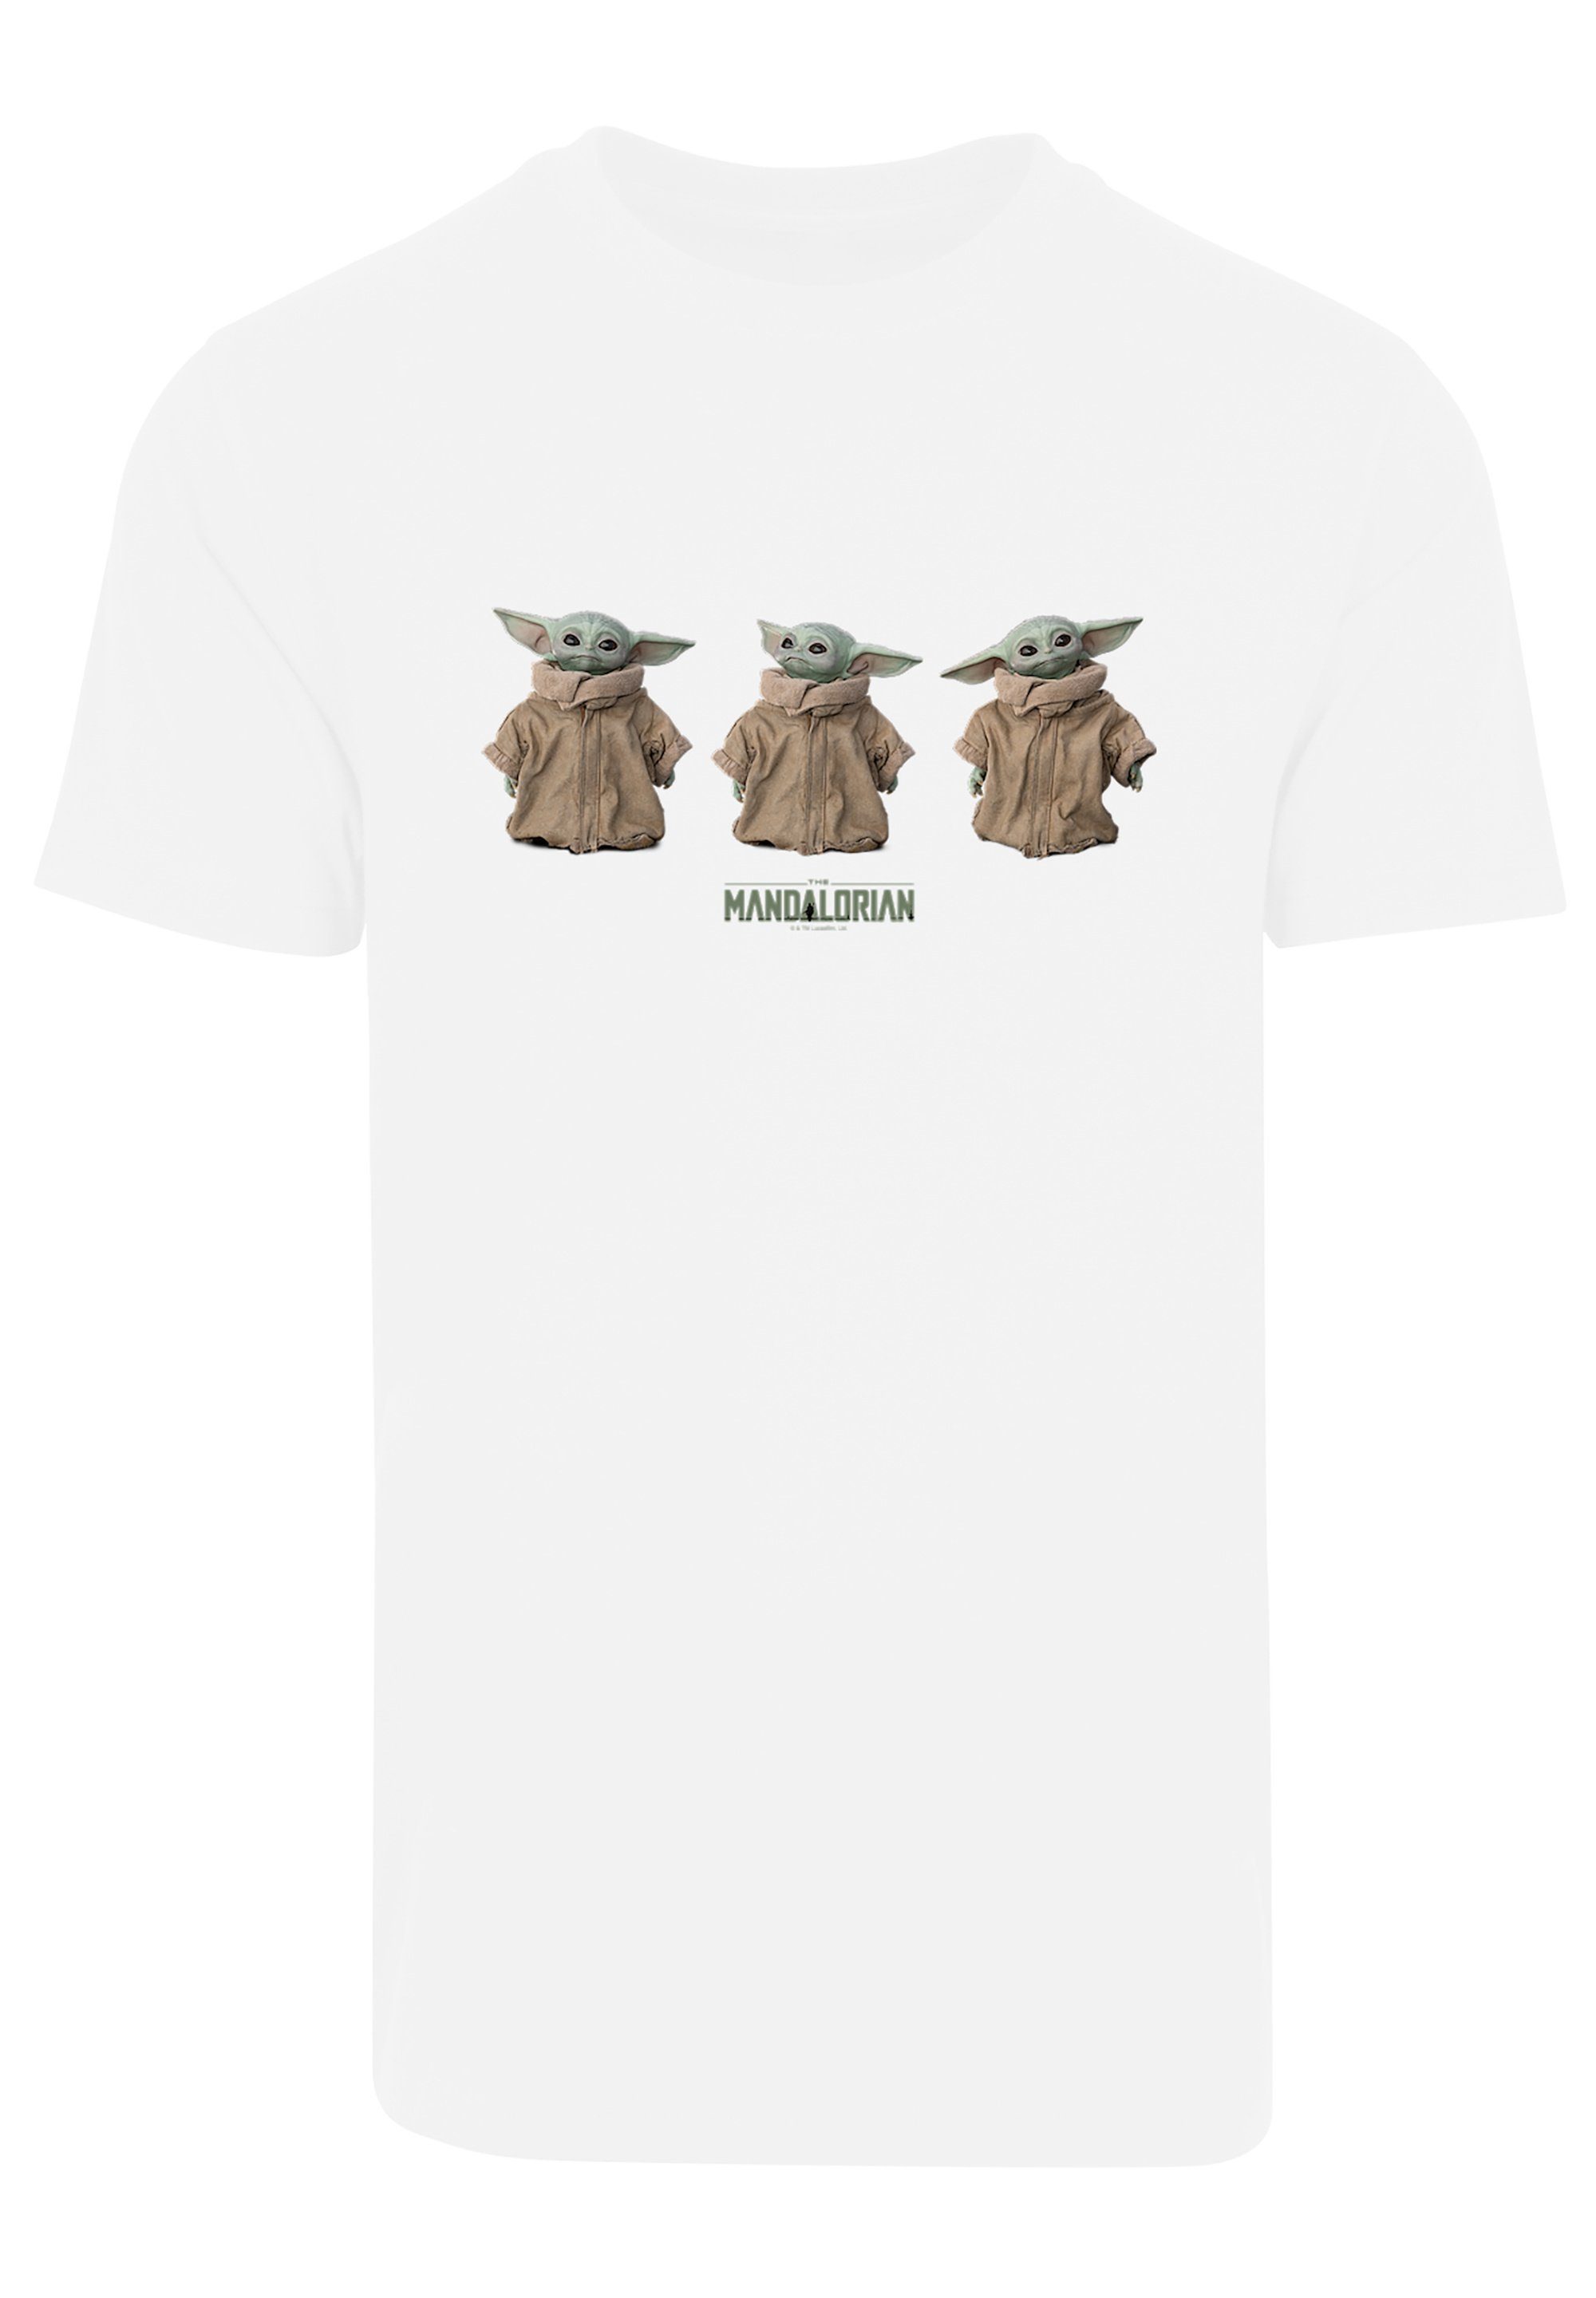 The Print Sterne Yoda F4NT4STIC der Wars Krieg weiß T-Shirt Baby Mandalorian Star